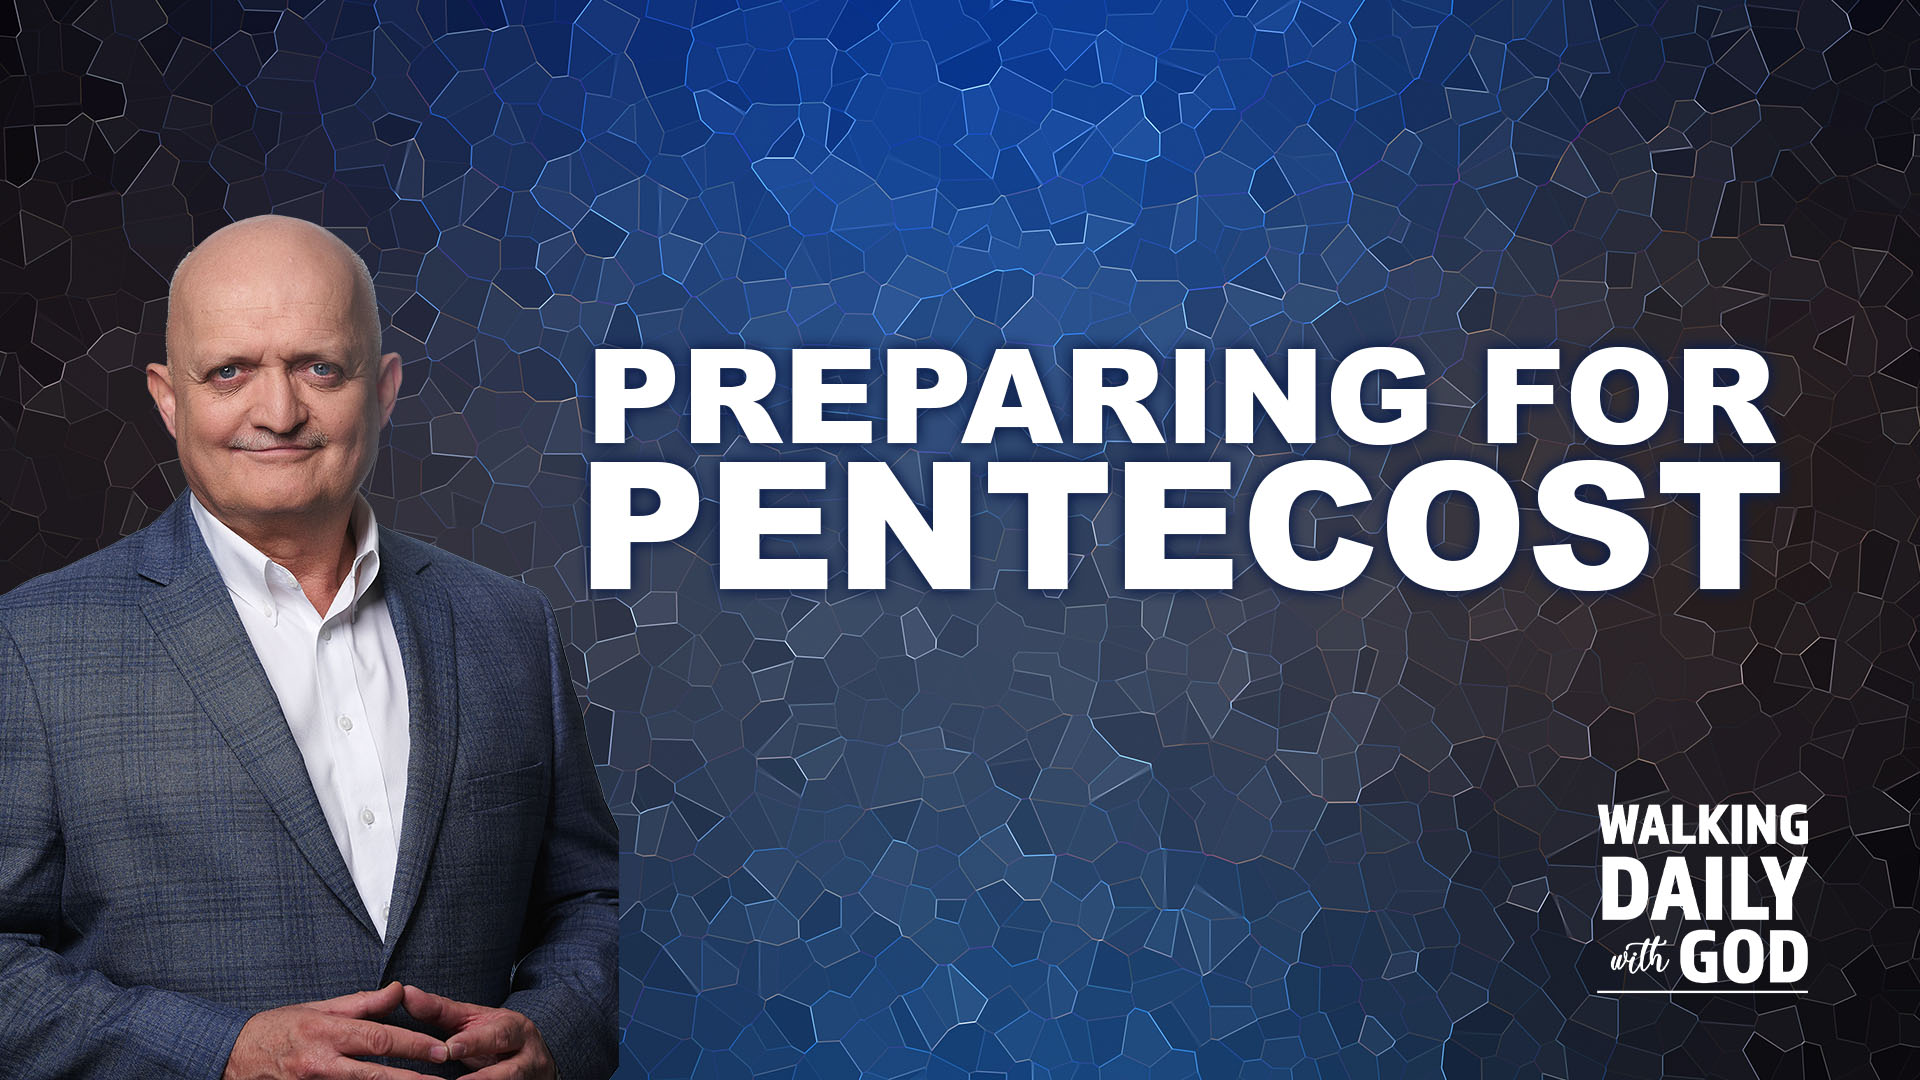 Preparing for Pentecost - The Gift